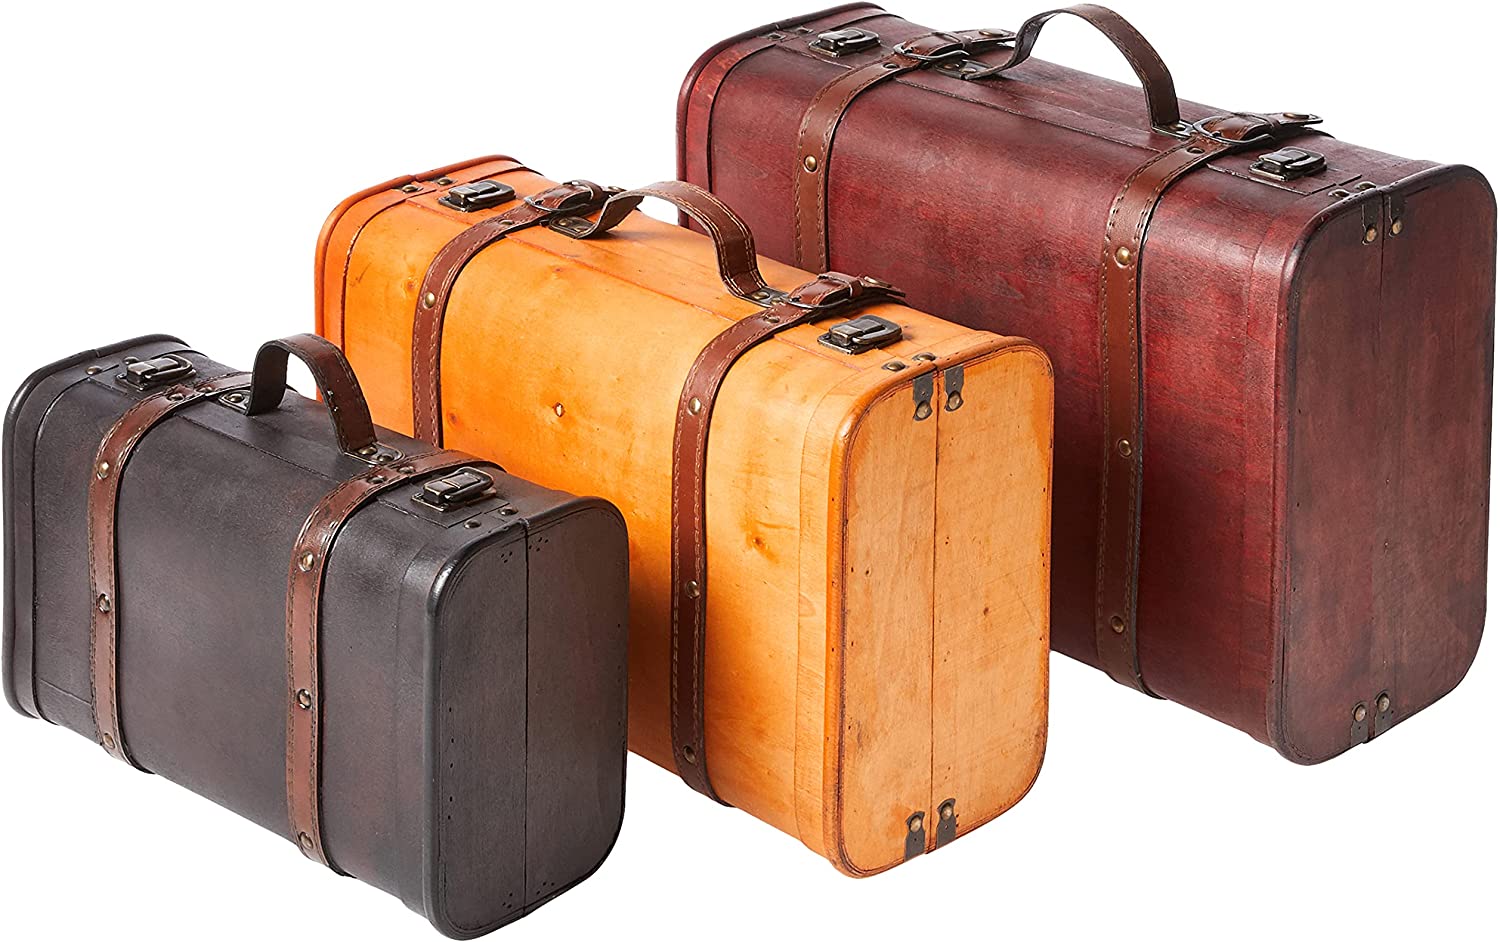 vintage luggage - Vintiquewise 3-Piece Vintage Luggage Set